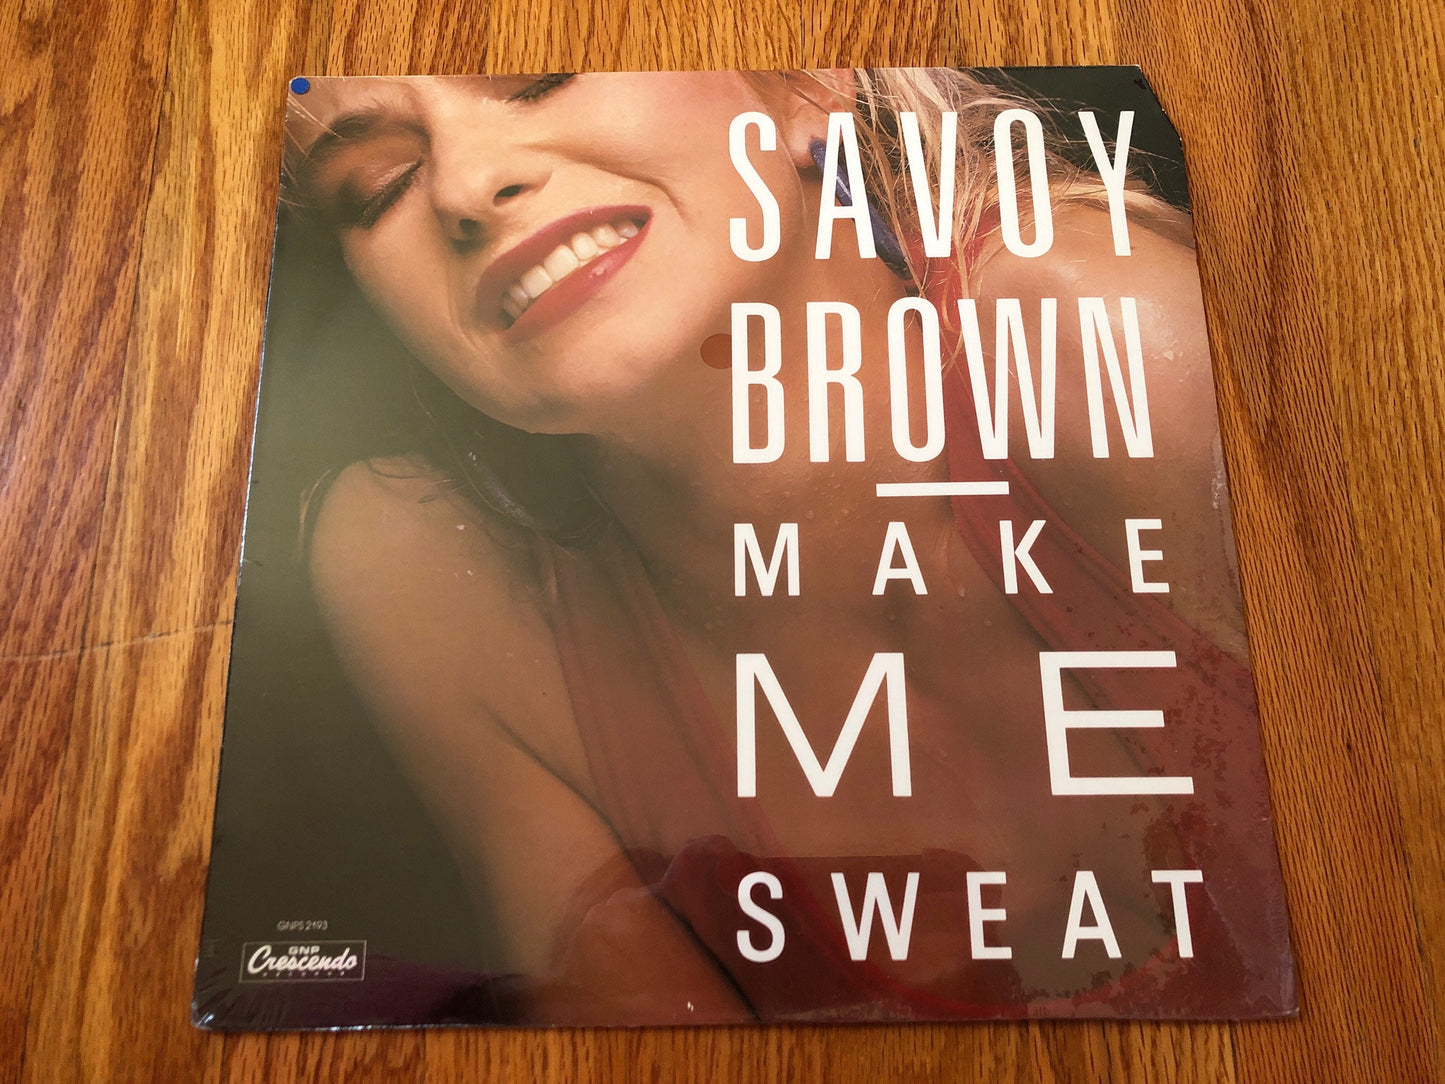 Savoy Brown | Make Me Sweat and Kings Of Boogie | SEALED | Blues Band | Blues Rock, Hard Rock | 1980's Savoy Brown